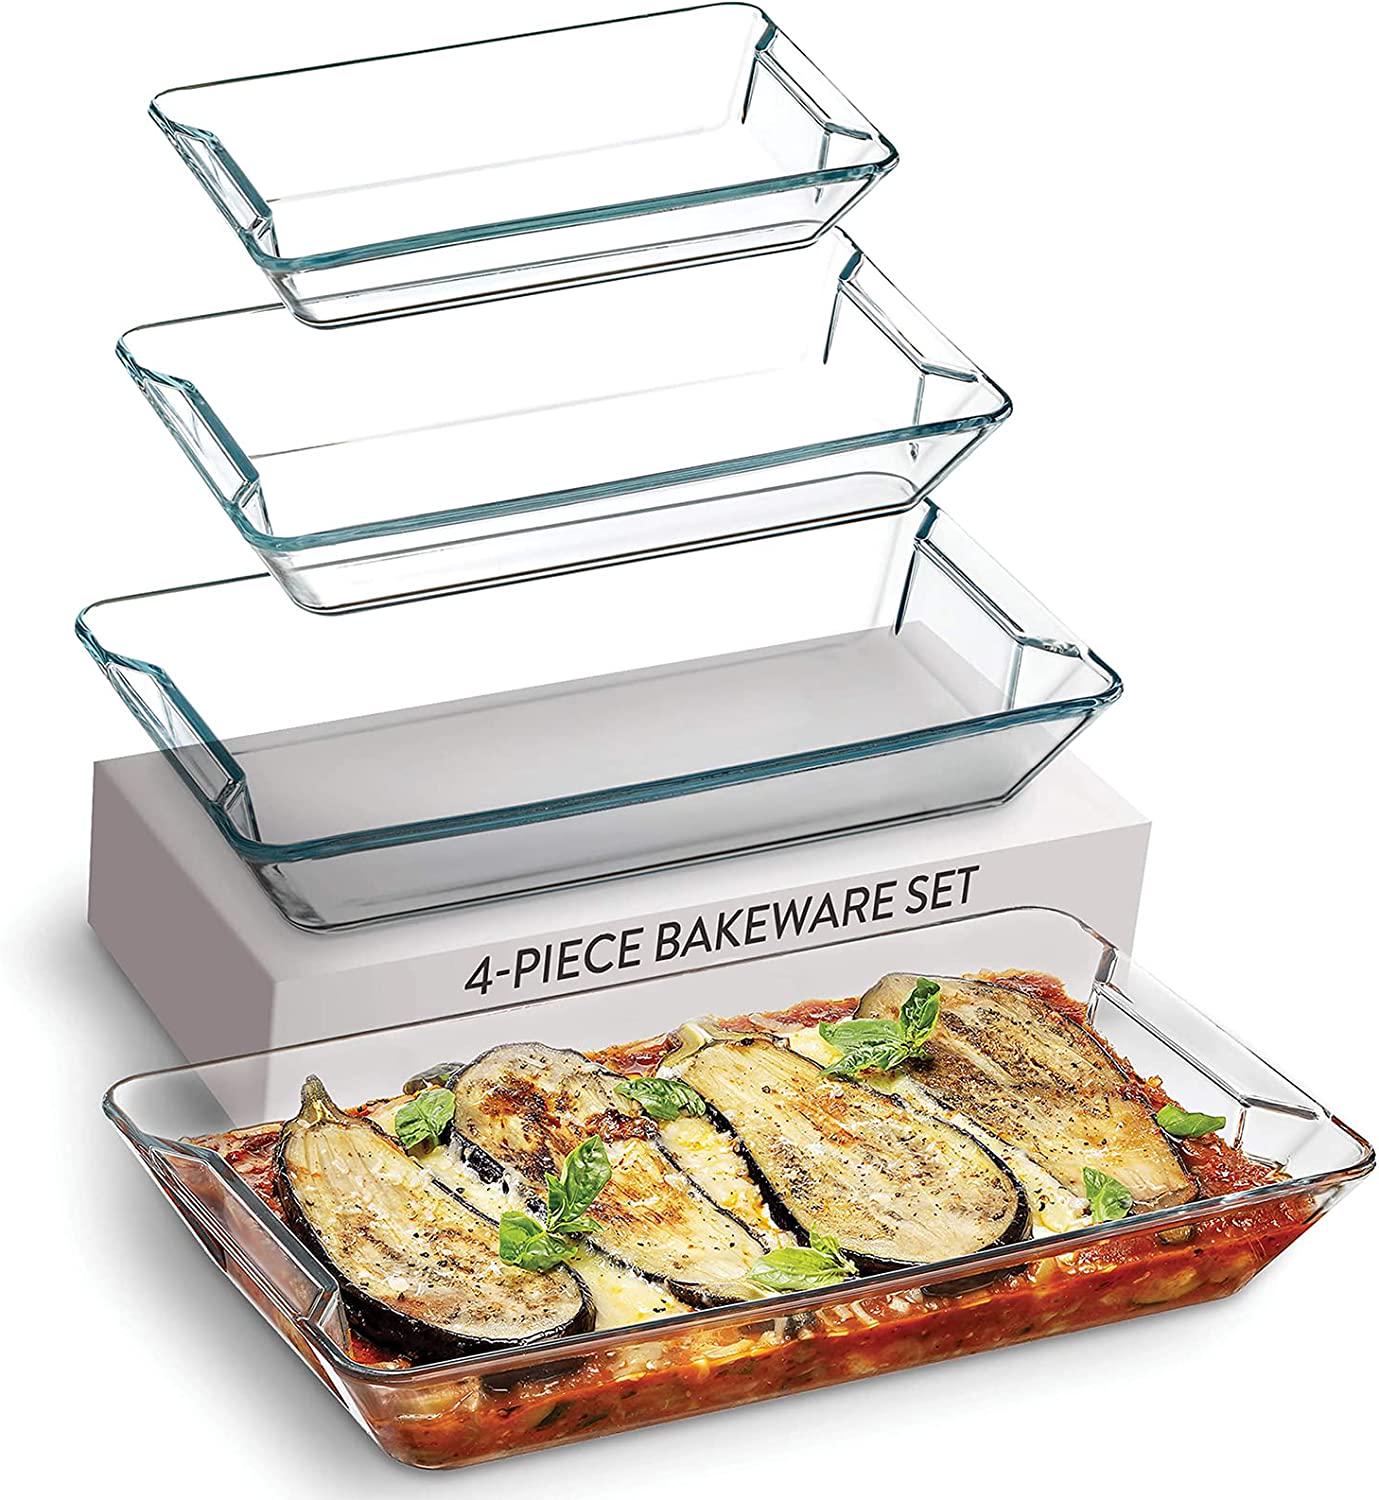 Kinsdan, Kinsdan Glass Casserole Baking Dish Set,4-Piece Rectangular Bakeware Set,with Handles,for Lasagna, Leftovers, Cooking